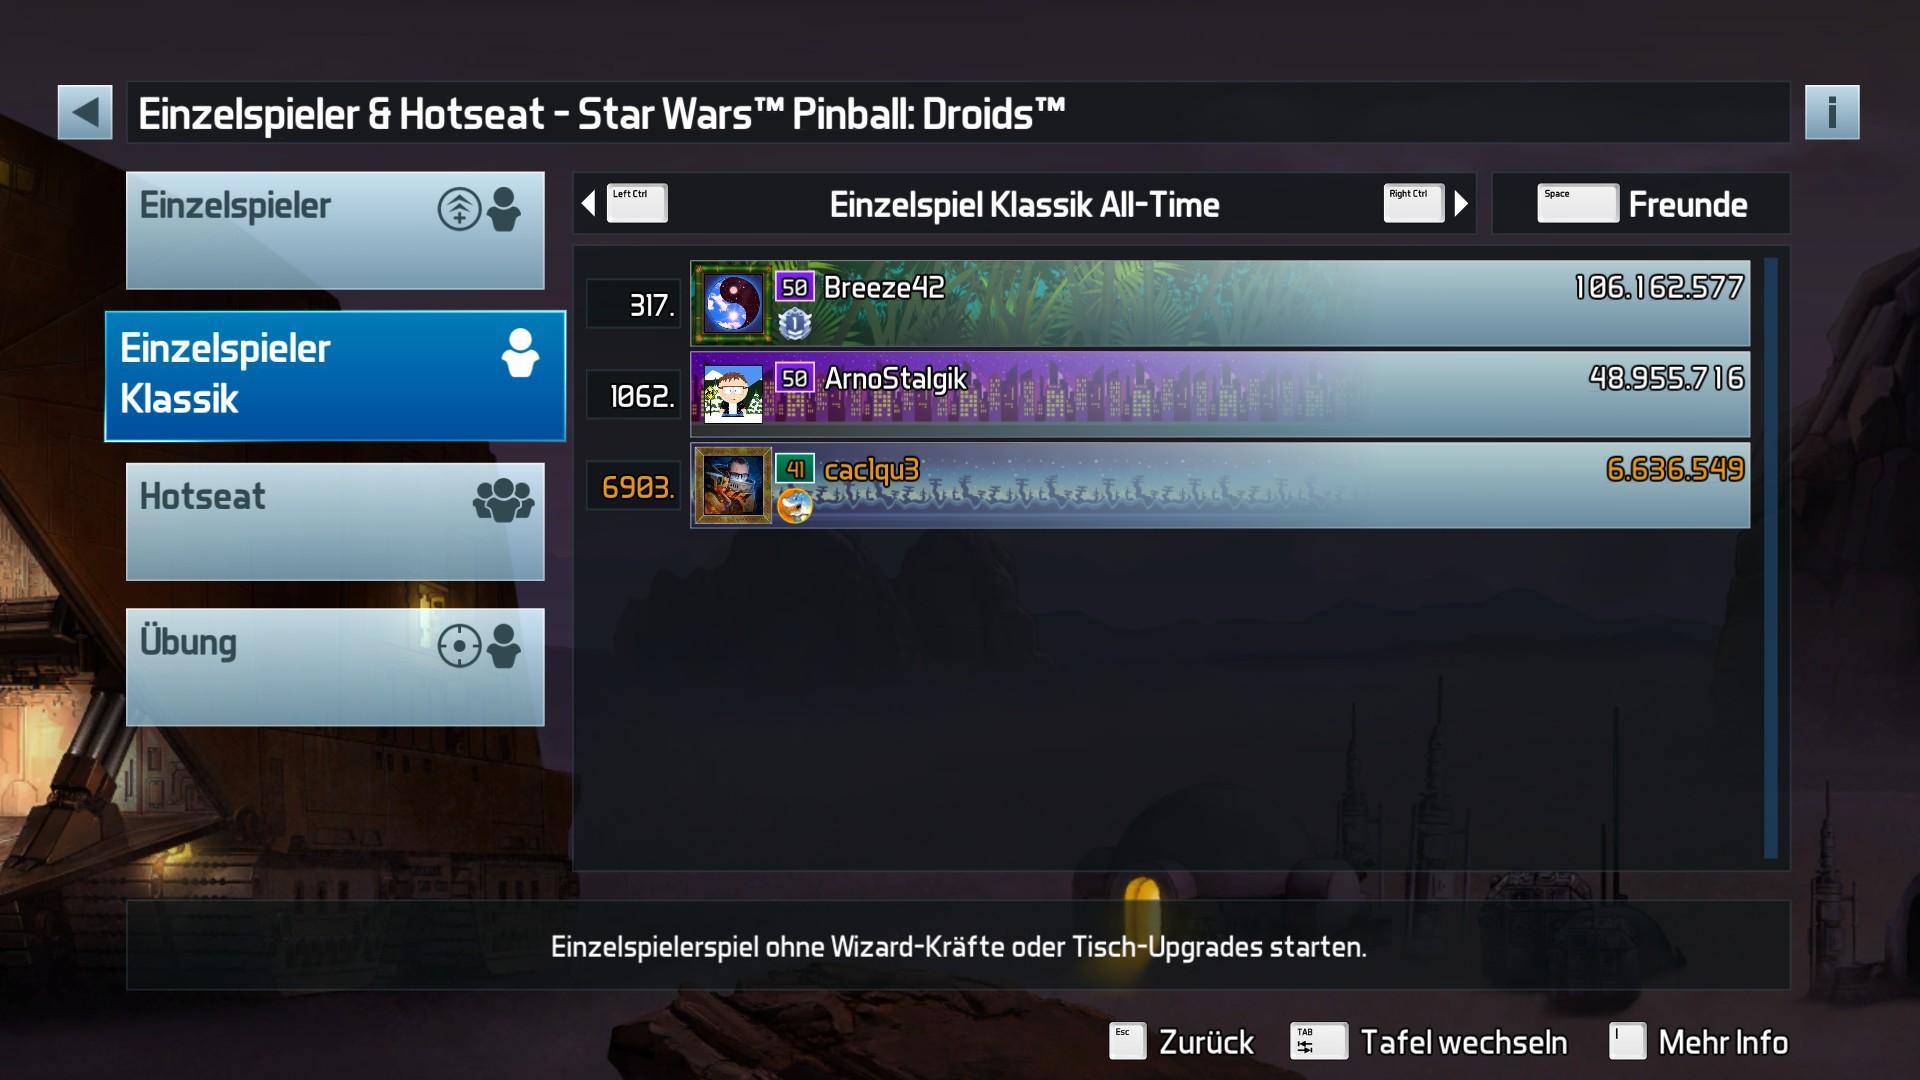 e2e4: Pinball FX3: Star Wars Pinball: Droids [Classic] (PC) 6,636,549 points on 2022-05-18 17:42:34